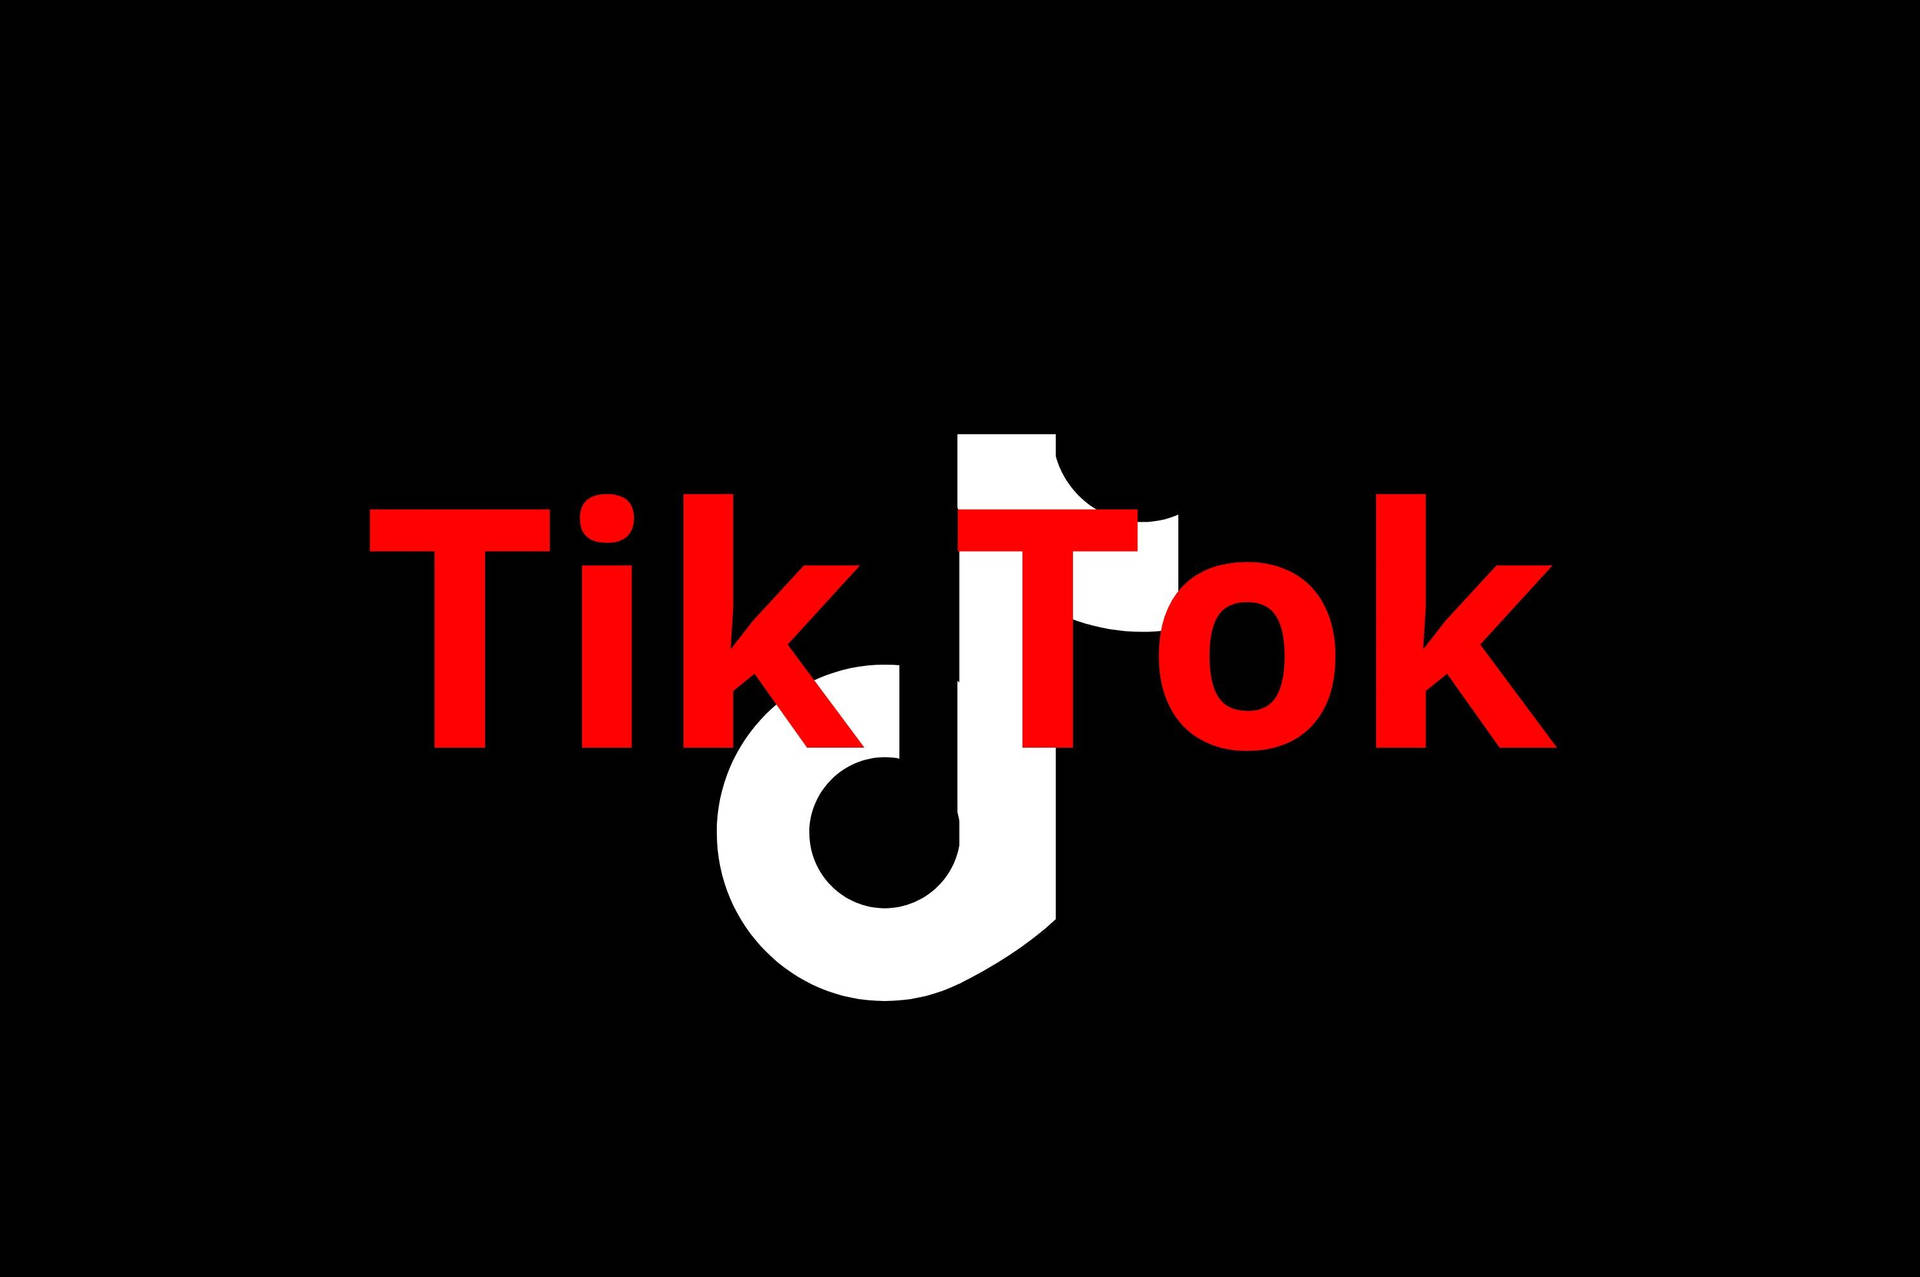 Tiktok 3008X2000 Wallpaper and Background Image